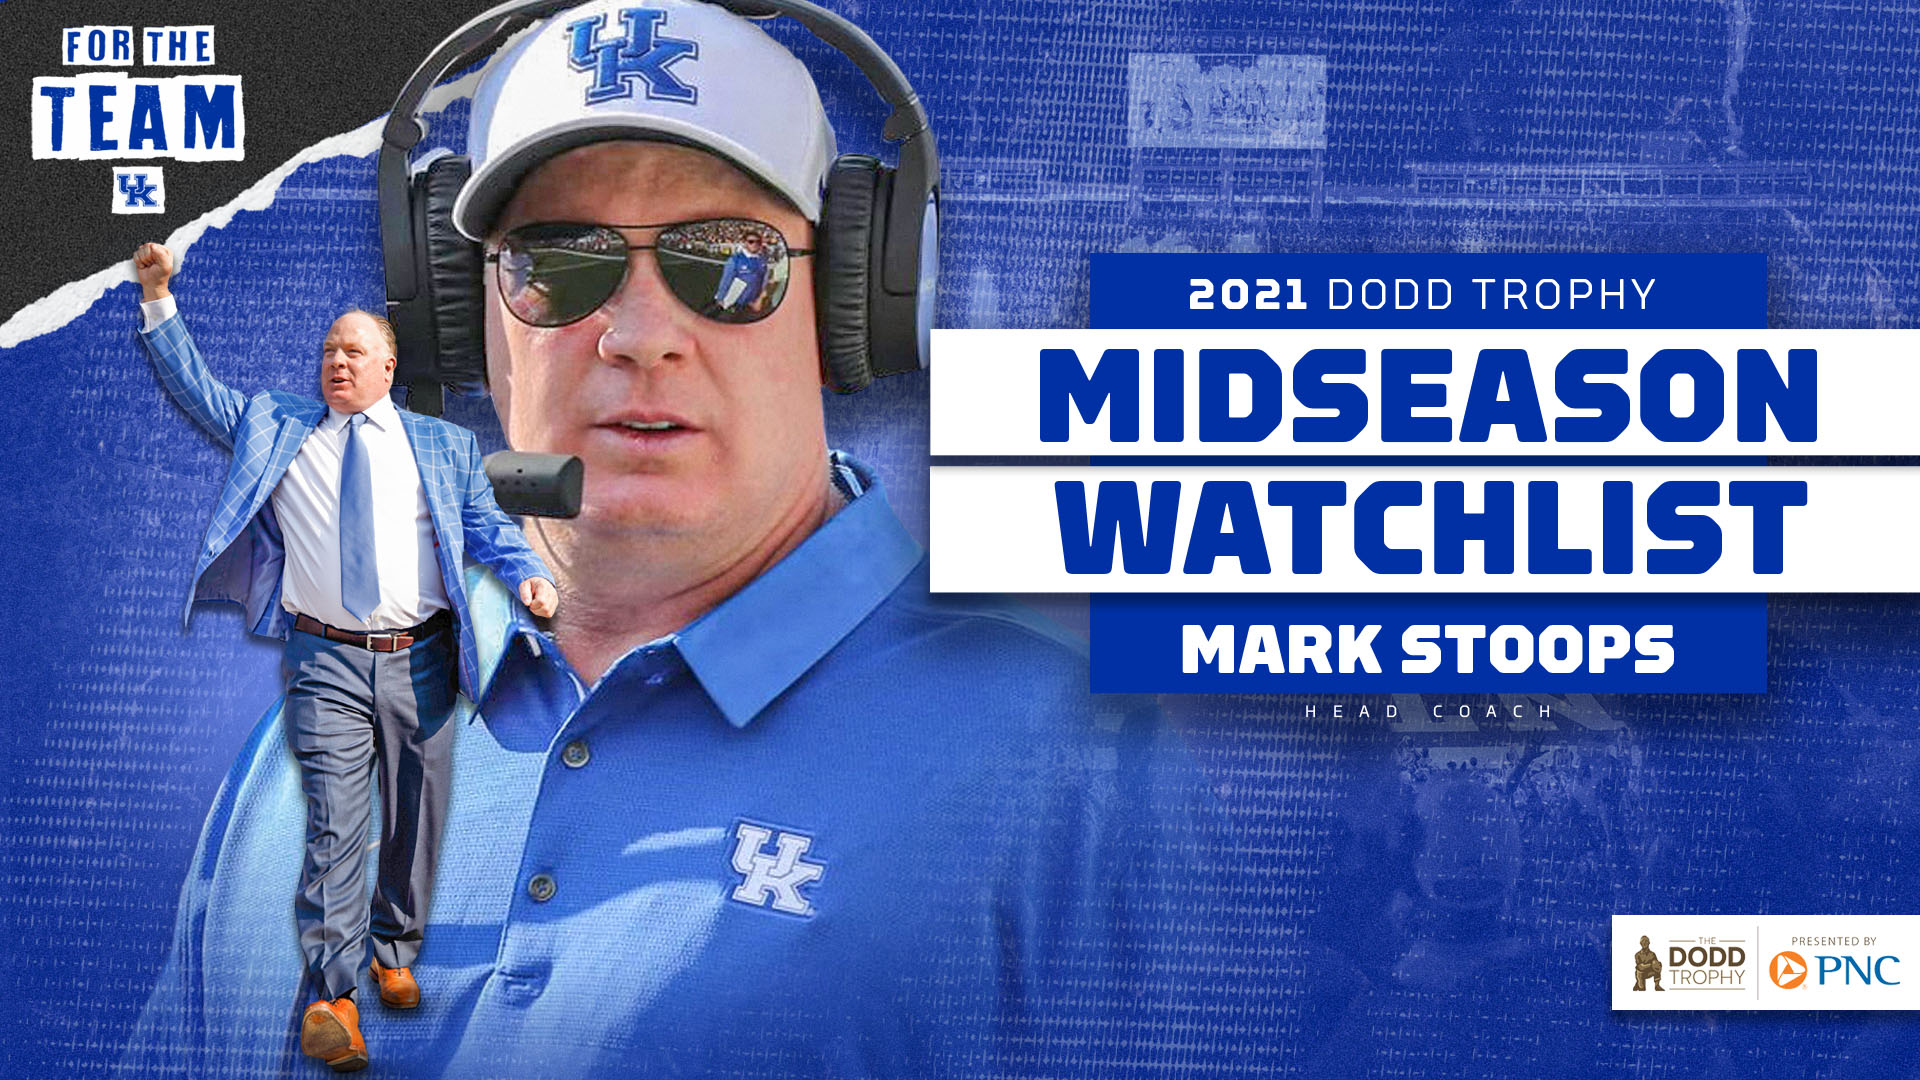 Mark Stoops Named to Dodd Trophy Midseason Watch List